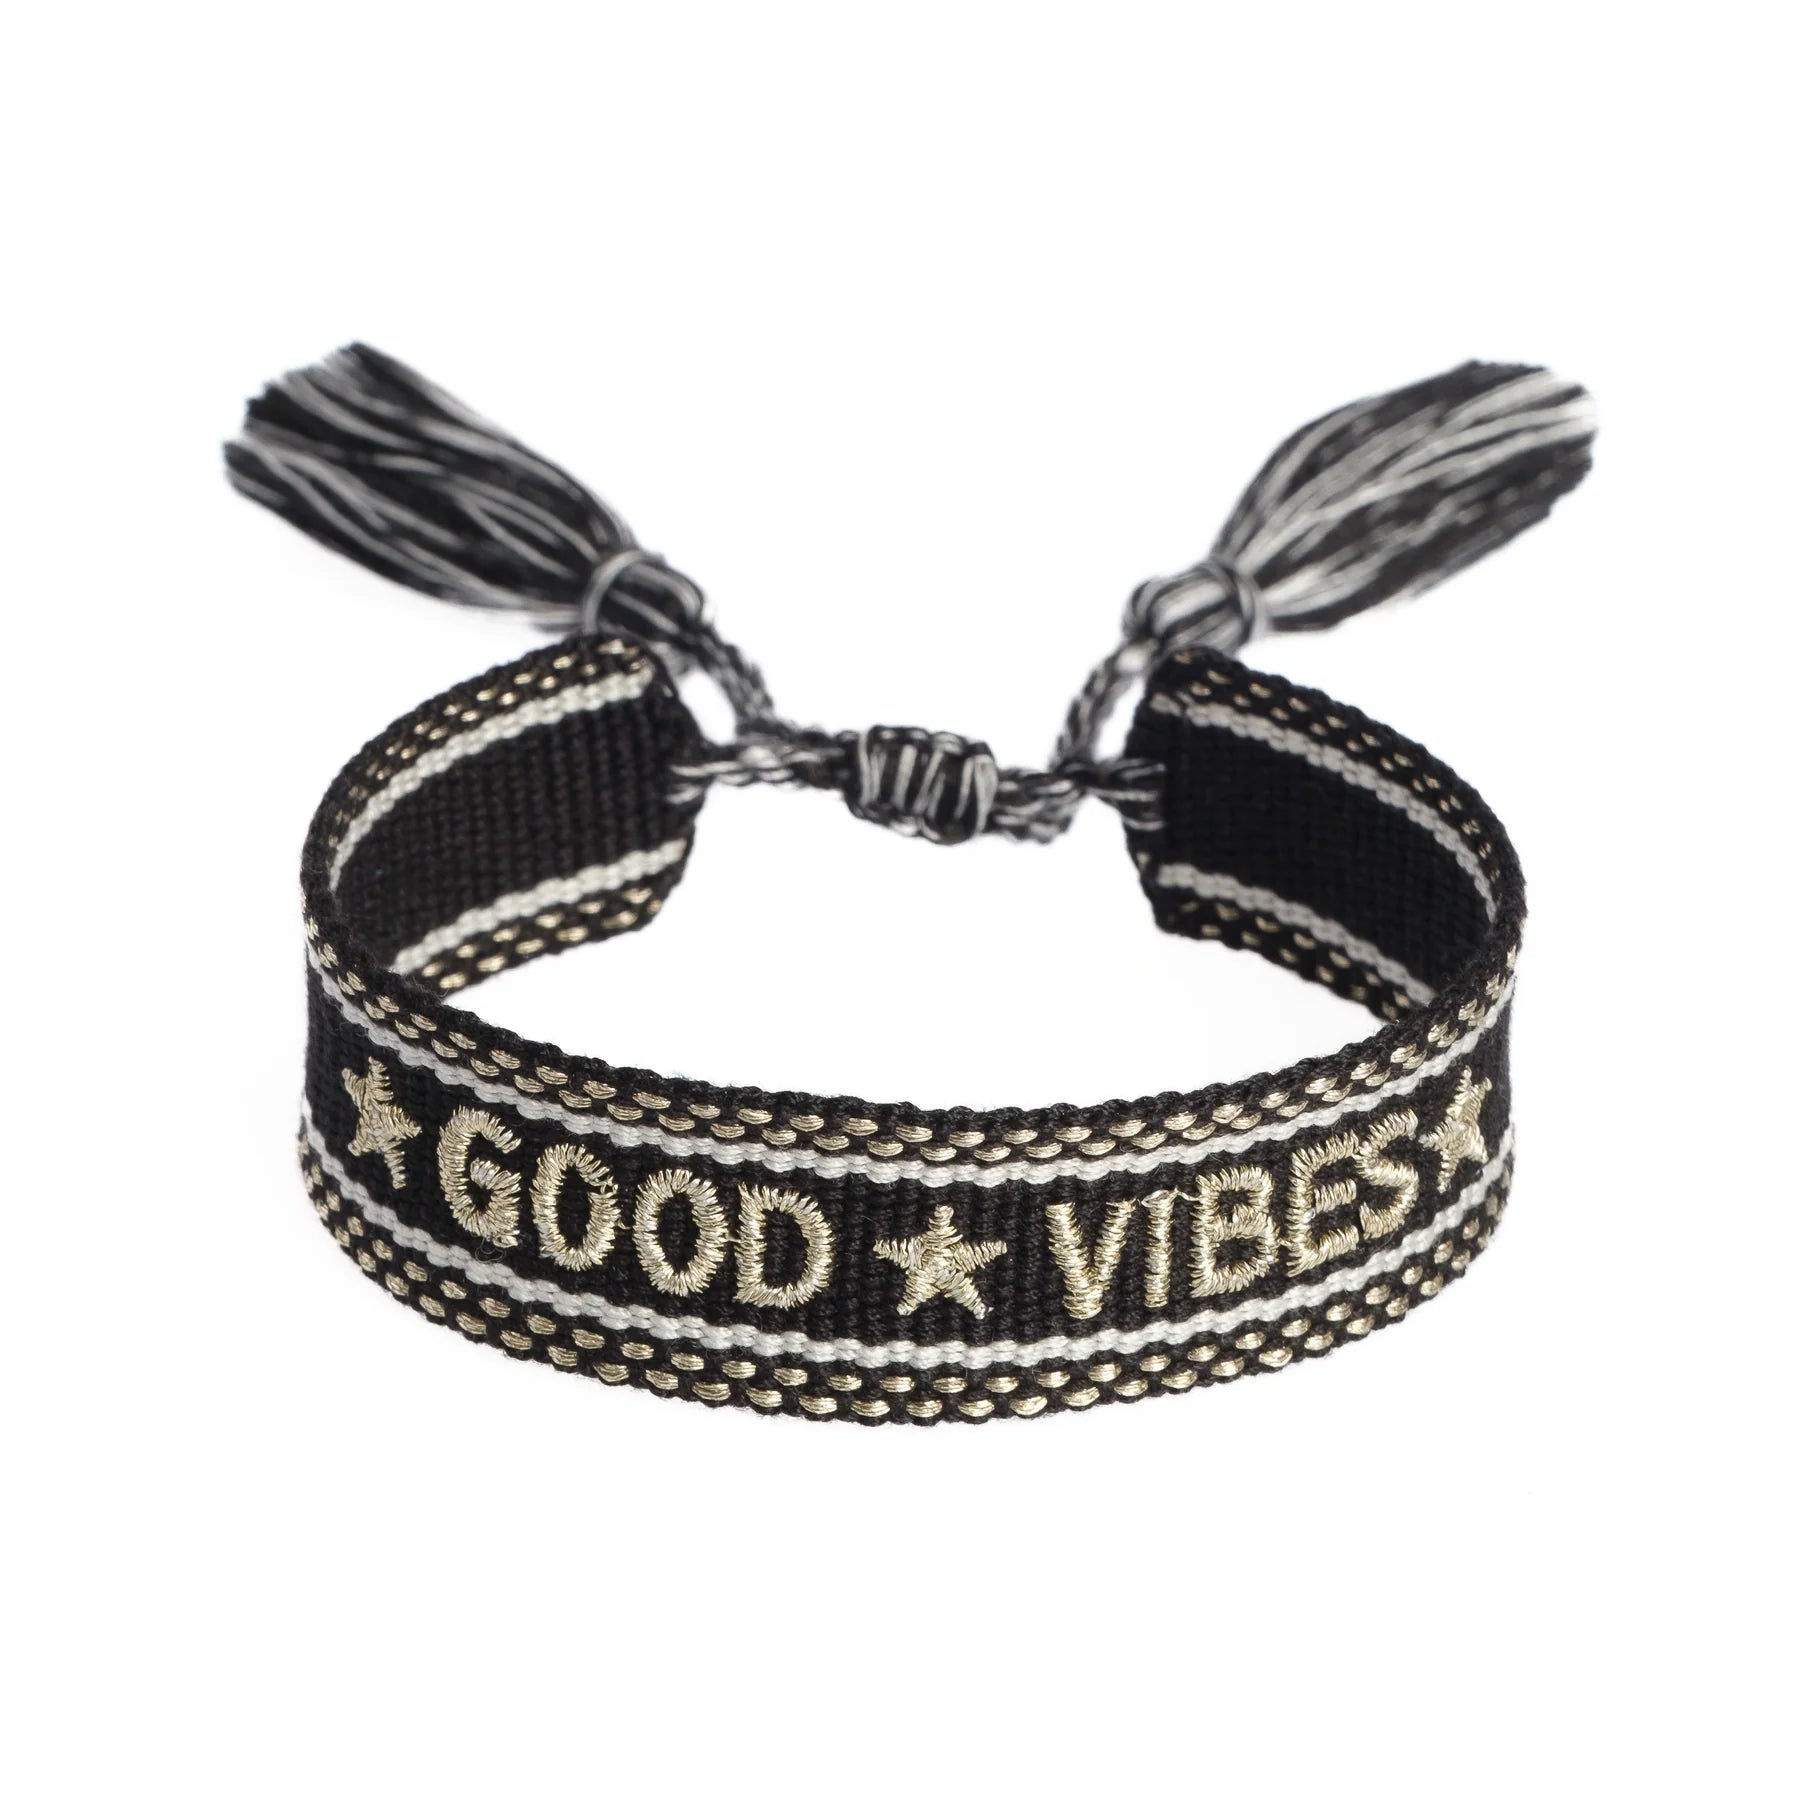 Woven Bracelet "Good Vibes" Black w/ Gold